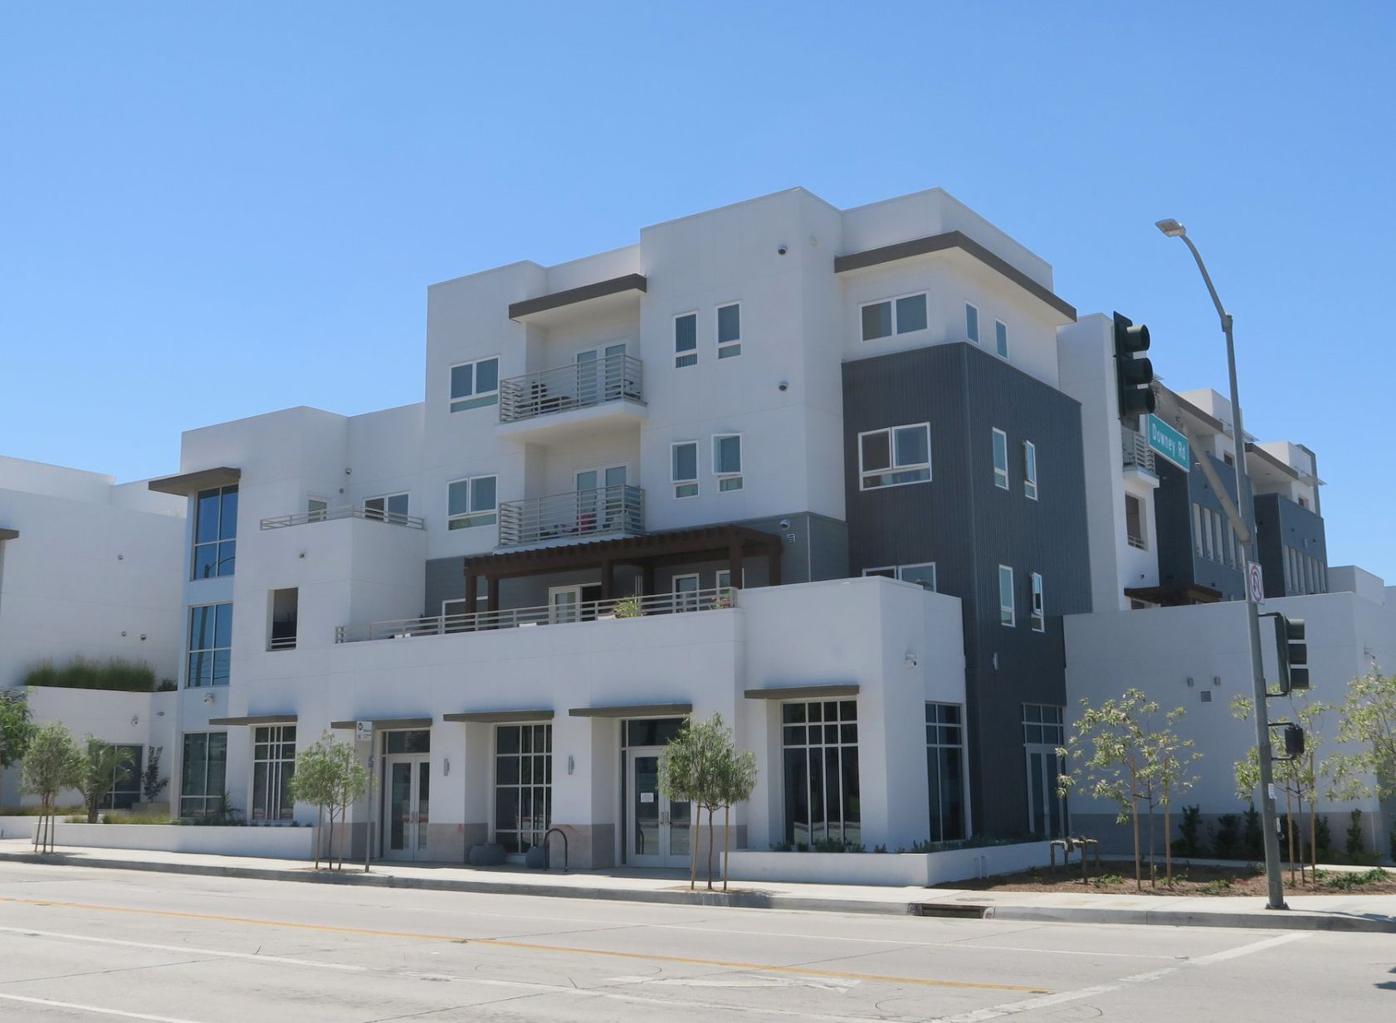 Hundreds Of Affordable Housing Units Under Development In East Los Angeles East La News Theeastsiderlacom